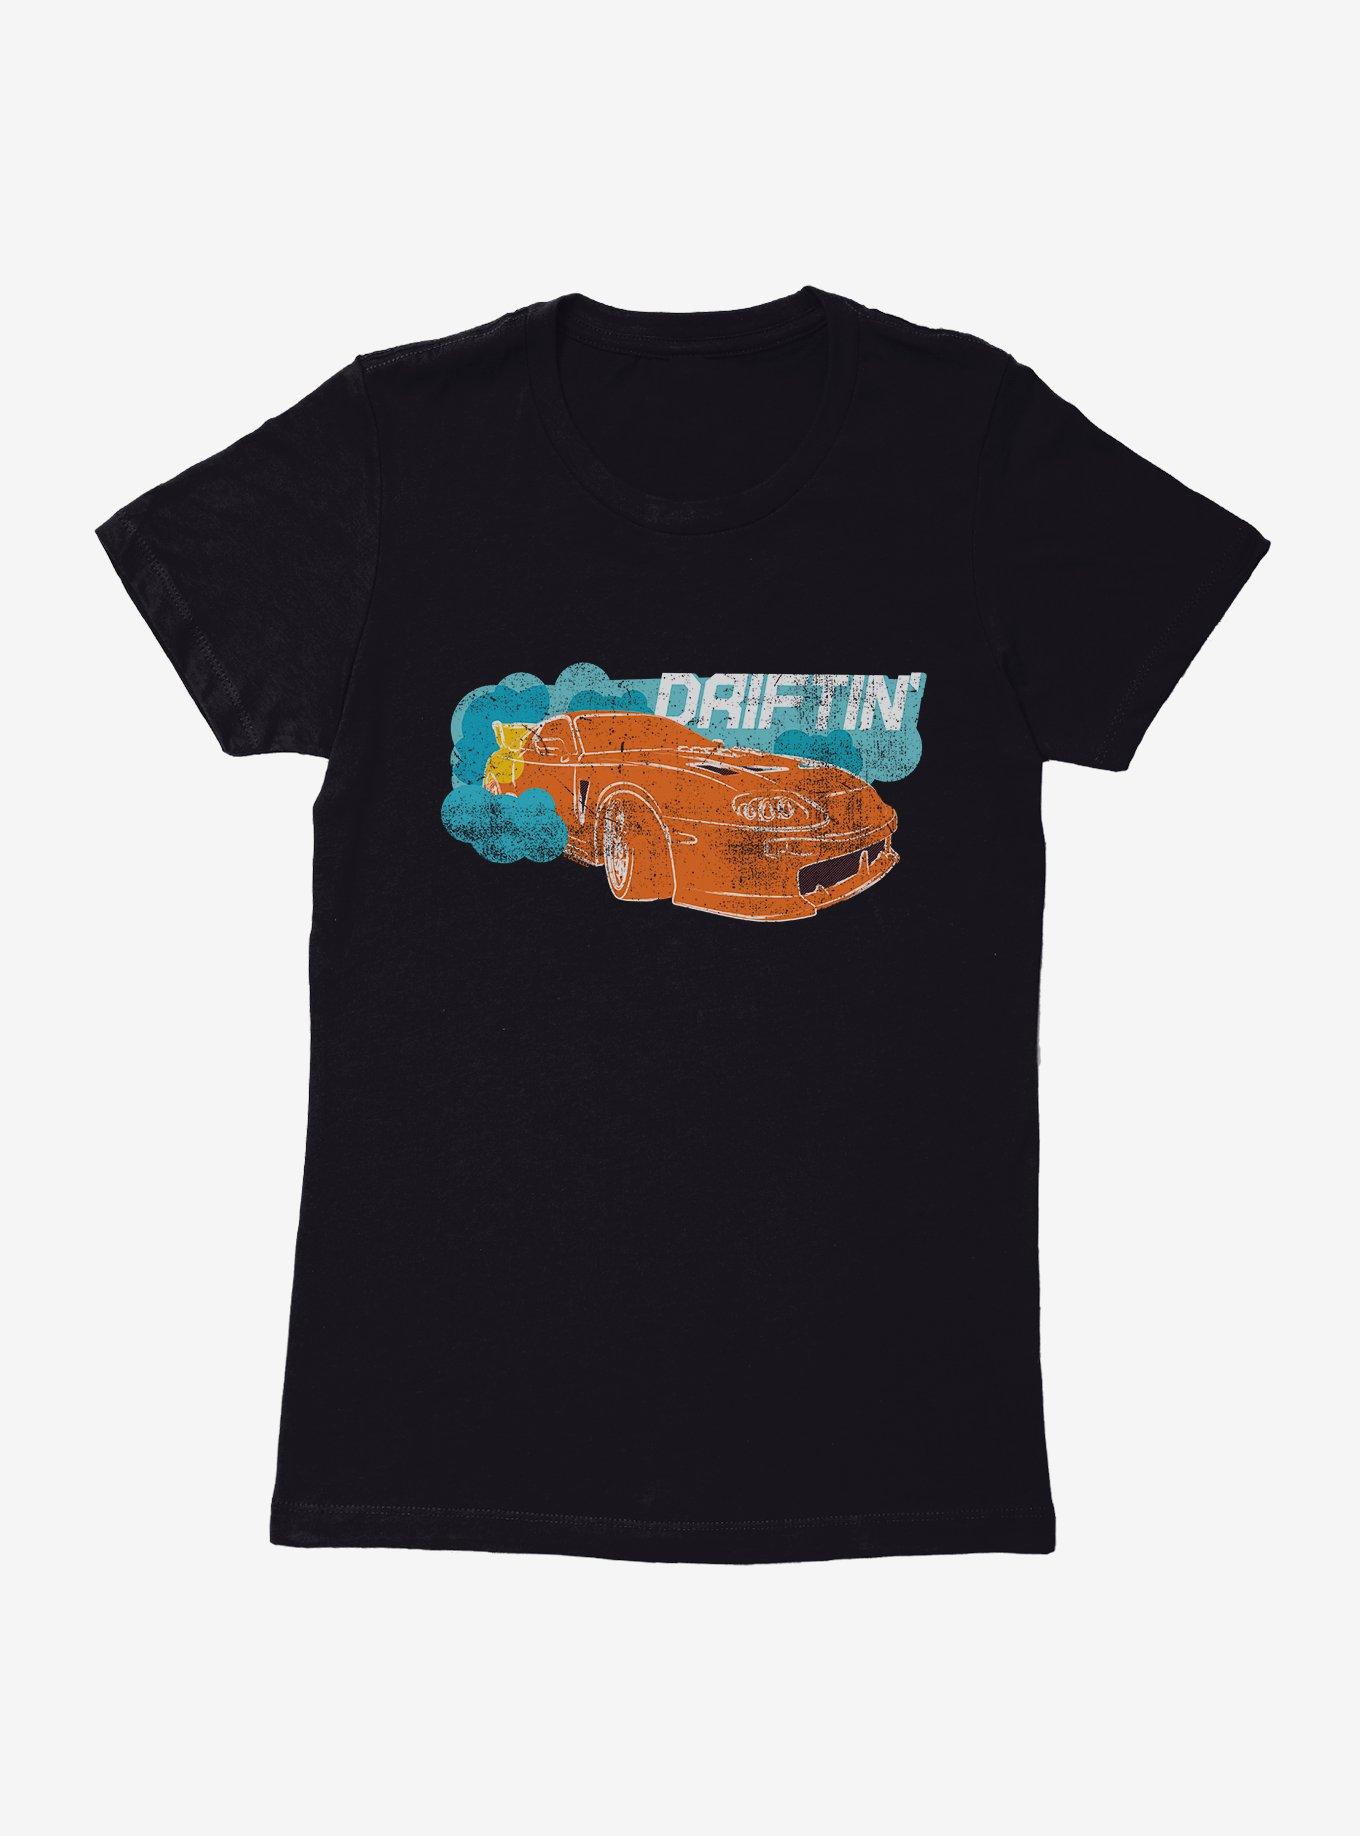 Fast & Furious Driftin' Womens T-Shirt, BLACK, hi-res